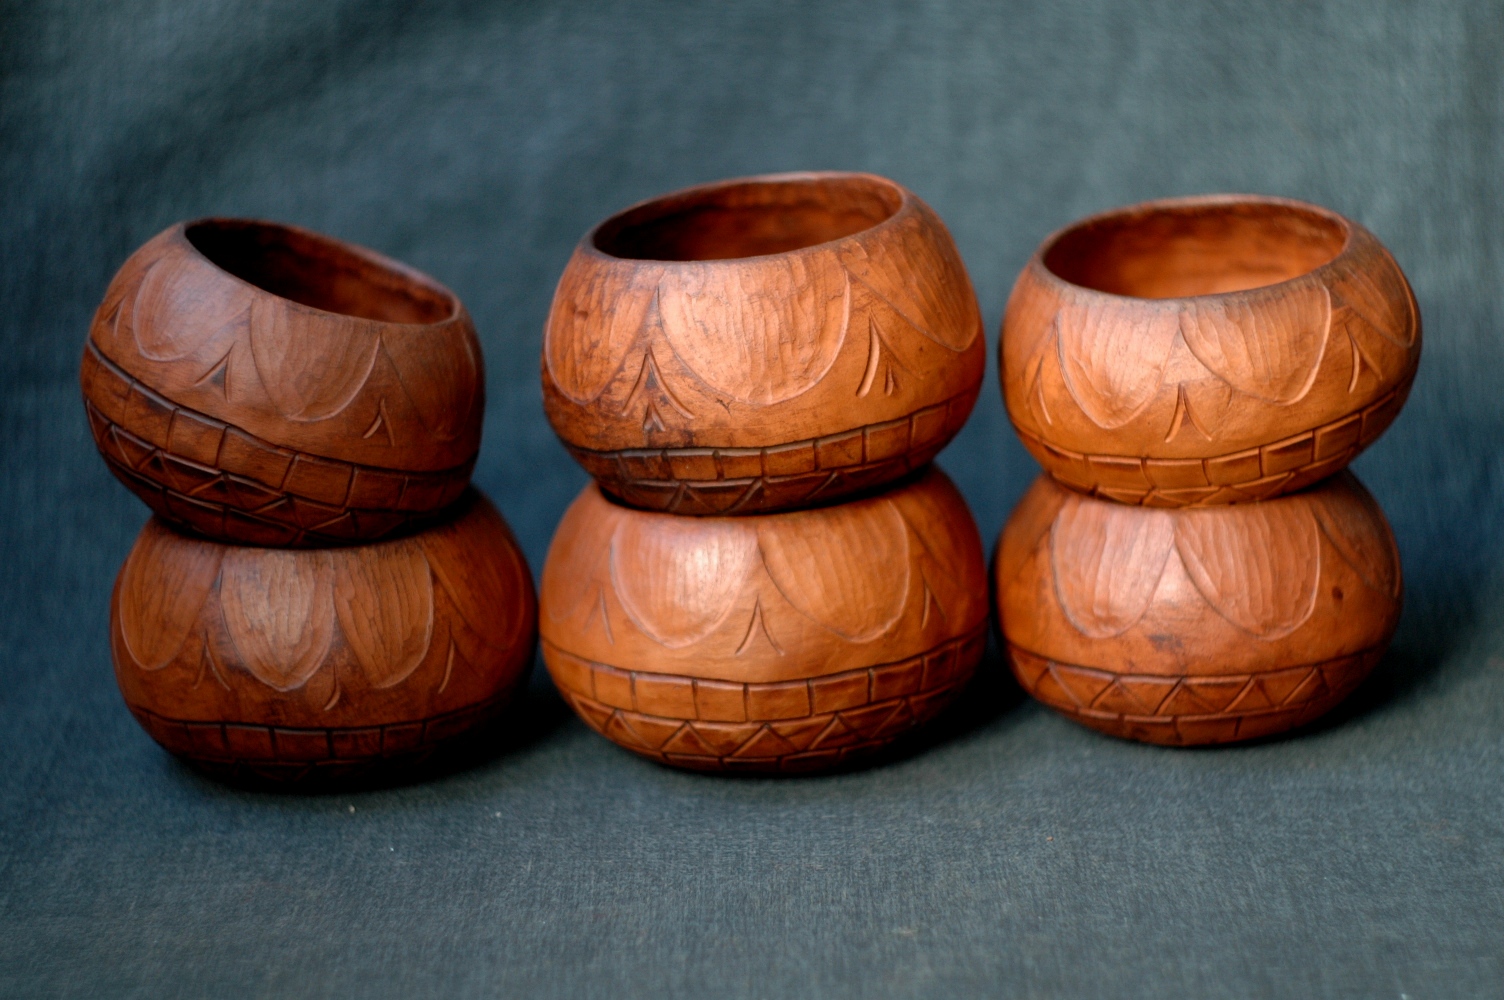 Sun pottery clay bowl of barrel shape